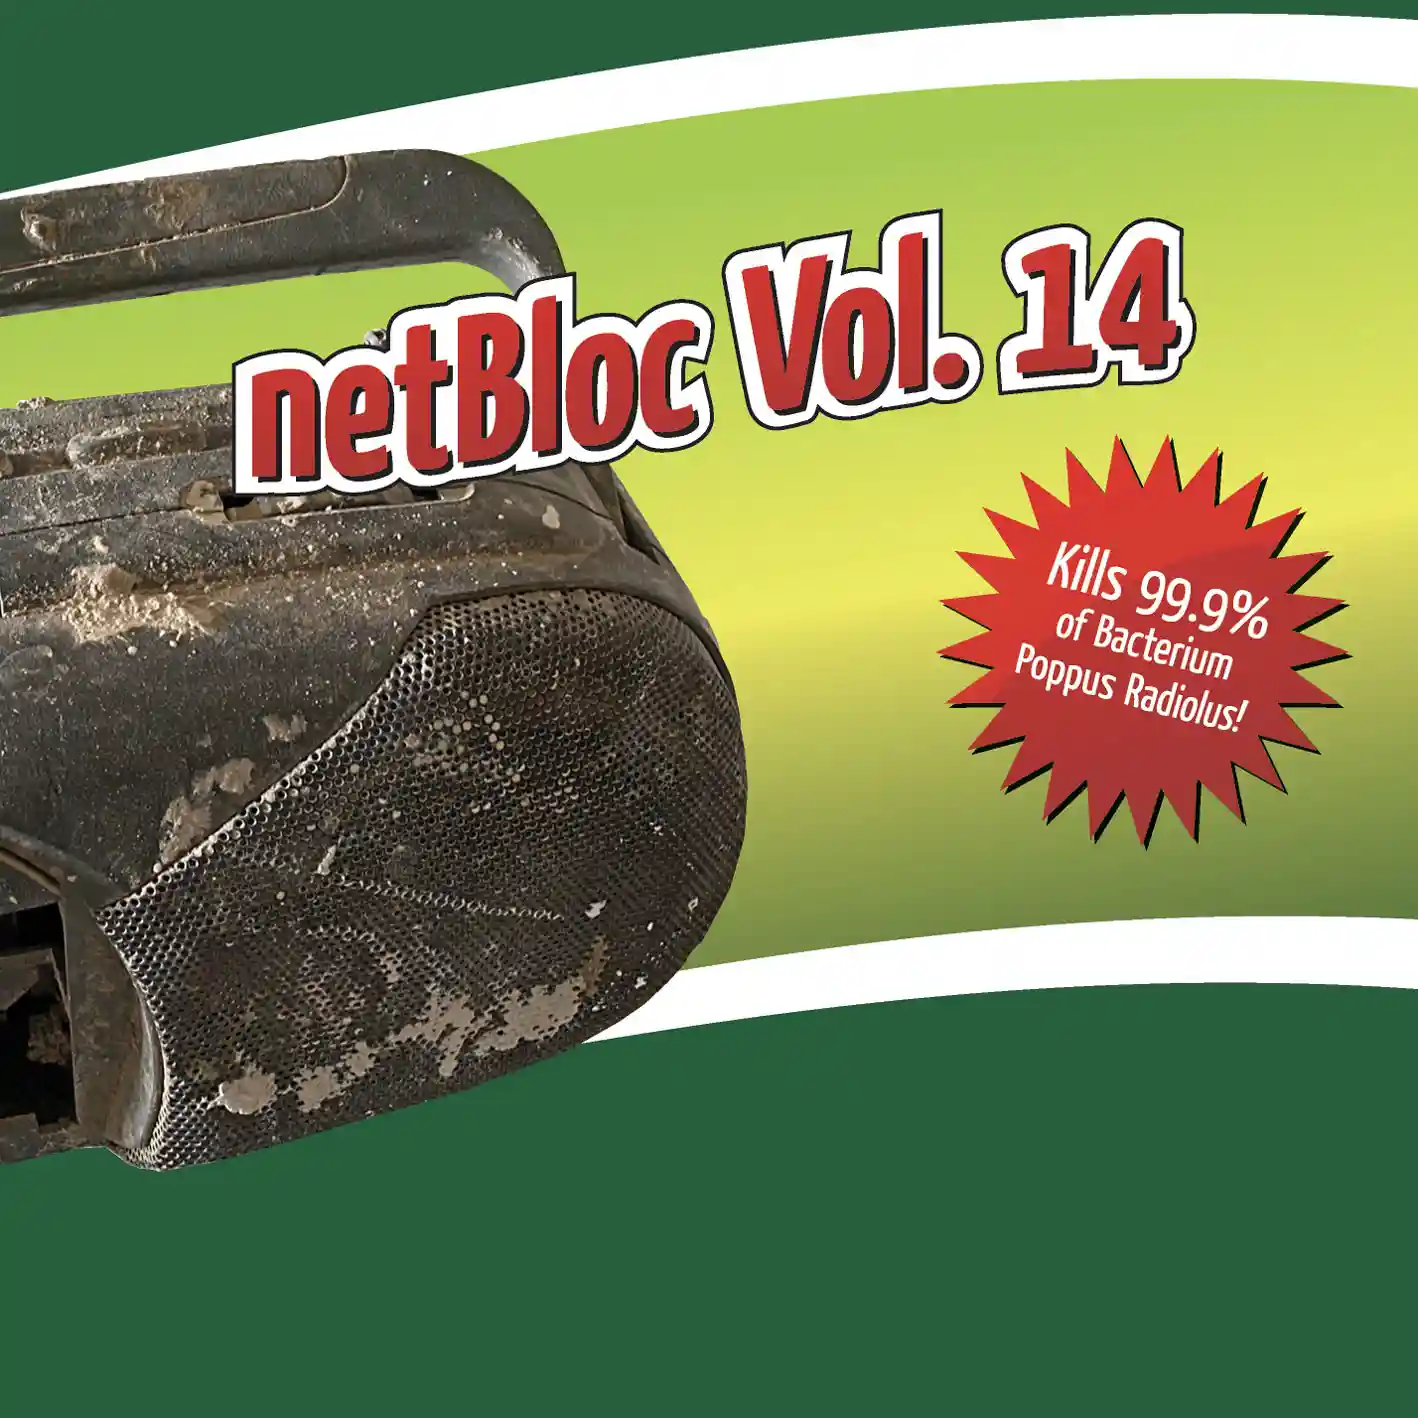 netBloc Vol. 14 Cover for “netBloc Volume 14 (Kills 99.9% of Bacterium Poppus Radiolus!)” by Various Artists